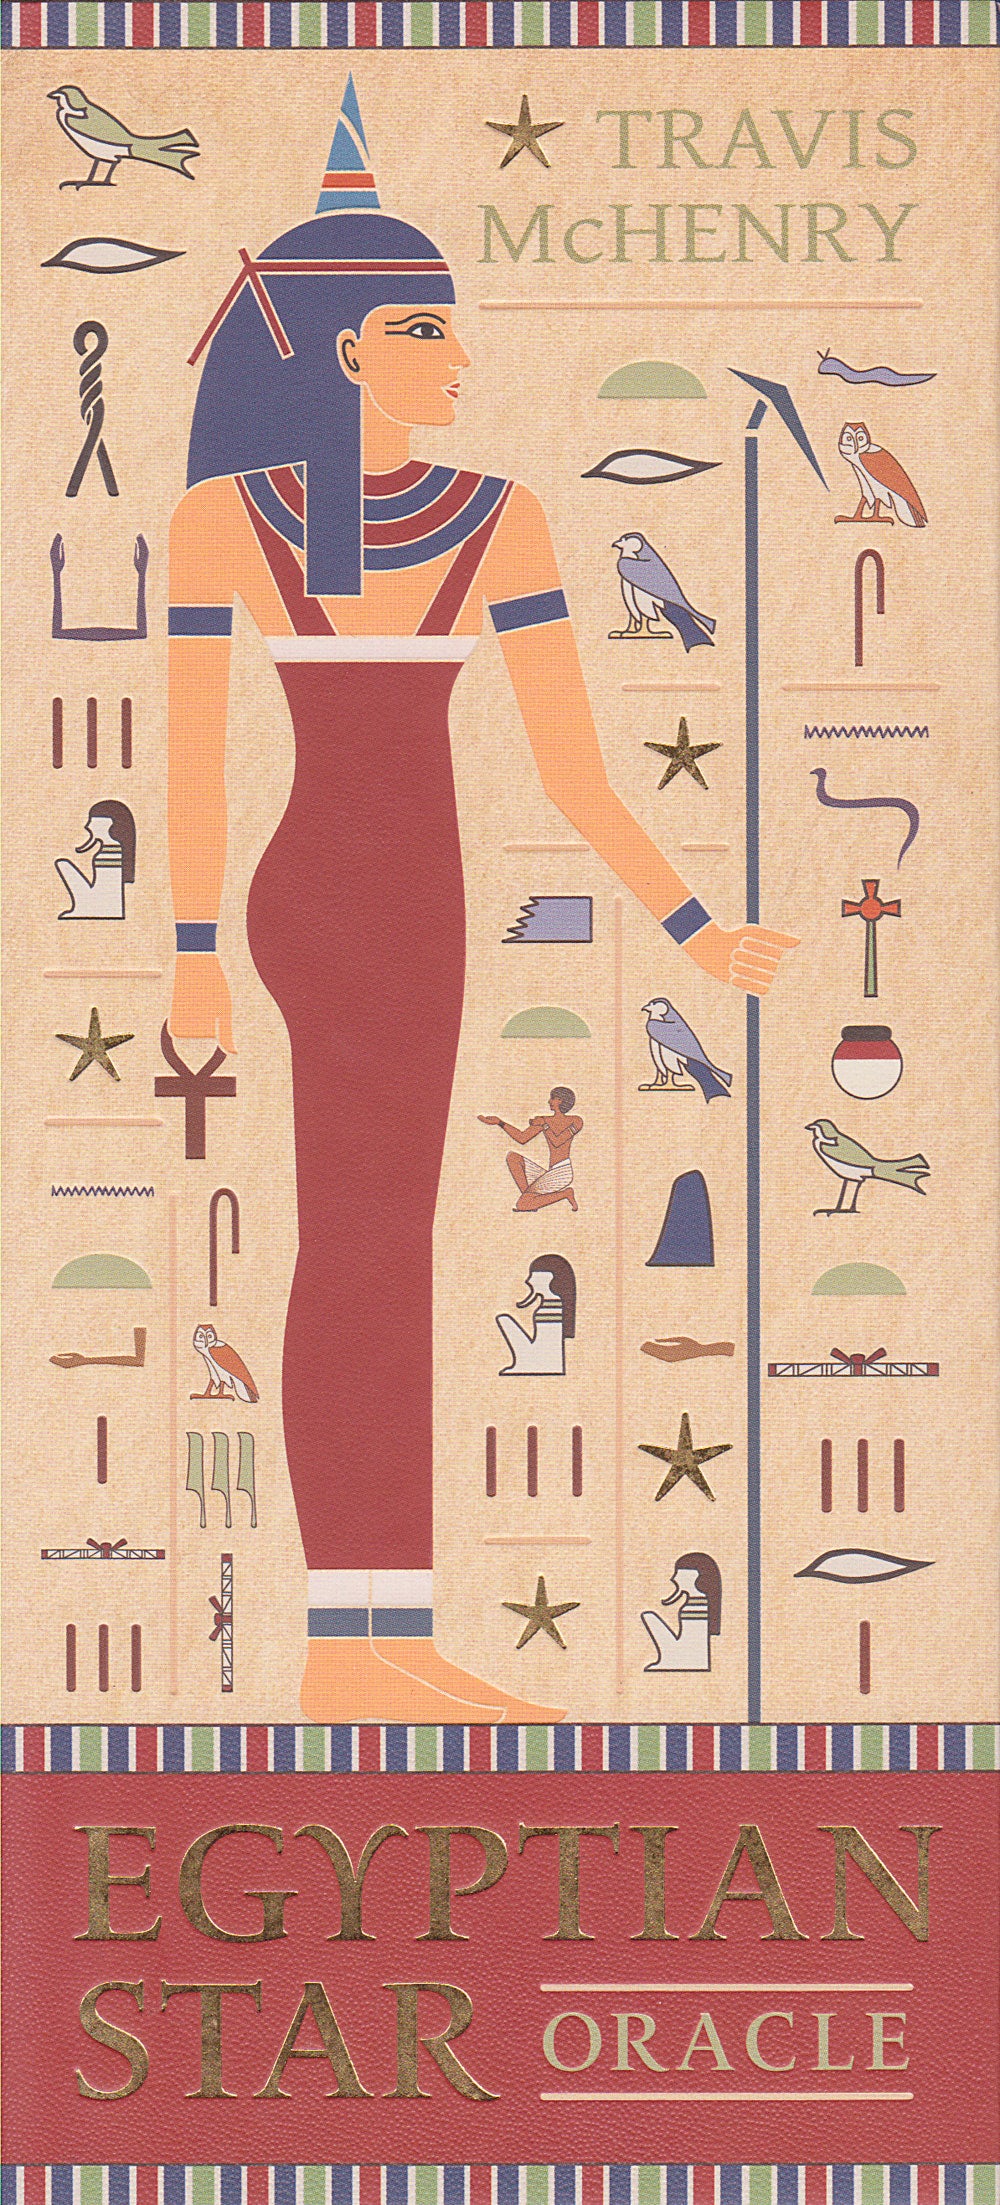 Egyptian Star Oracle